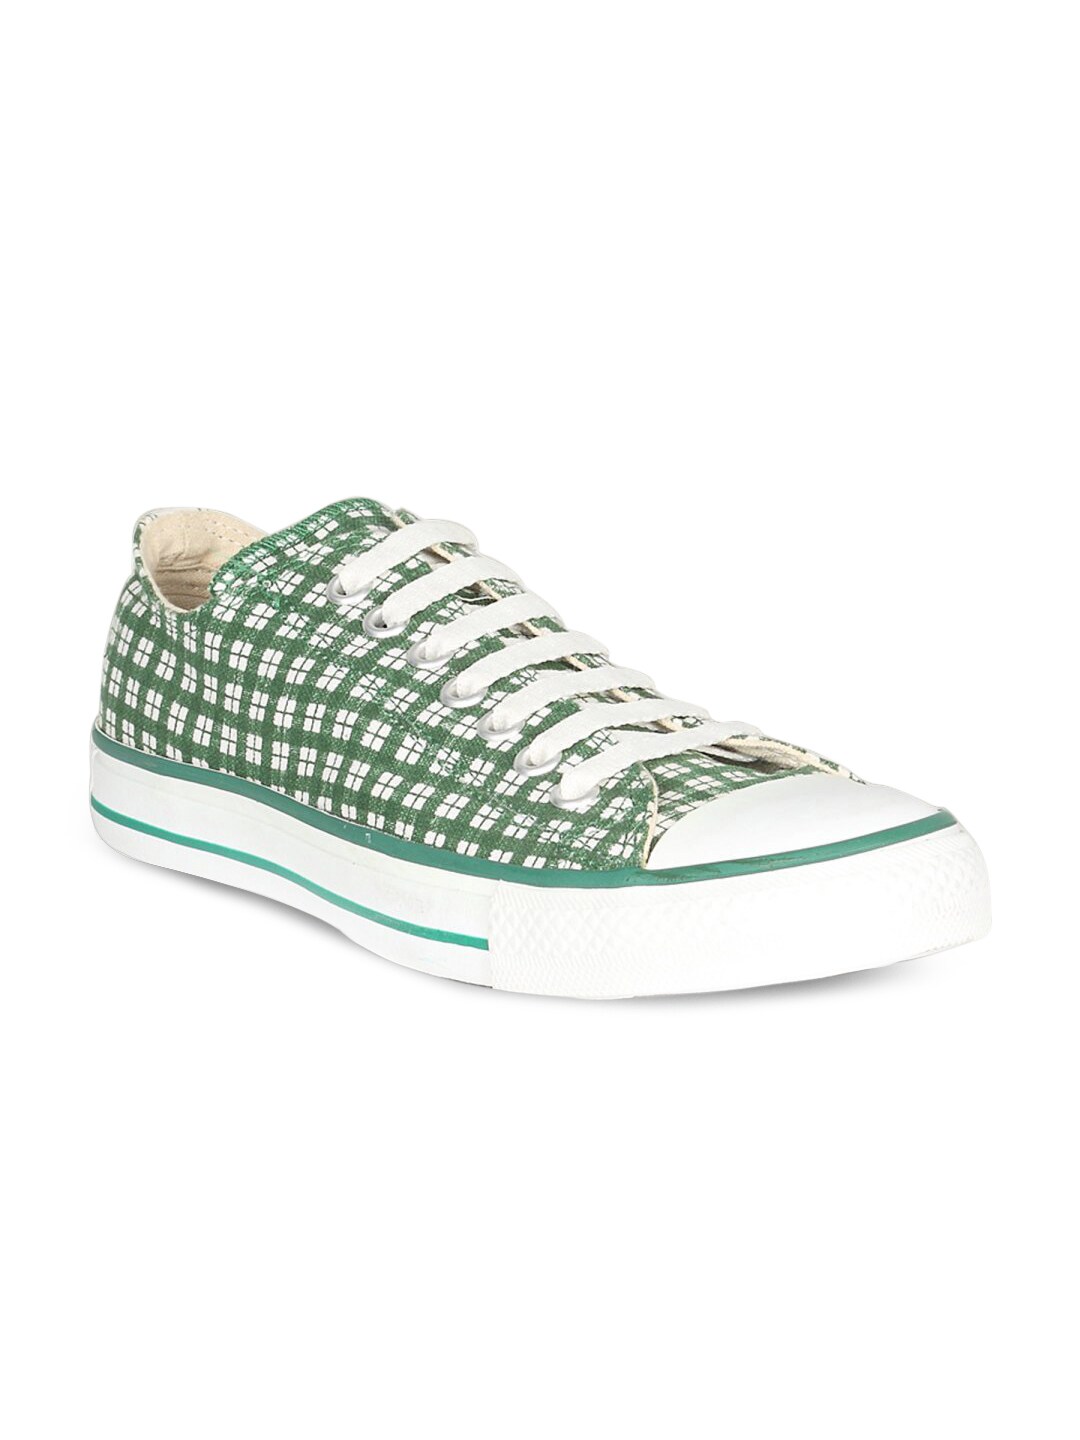 Converse Unisex Heck Ox Green White Shoe